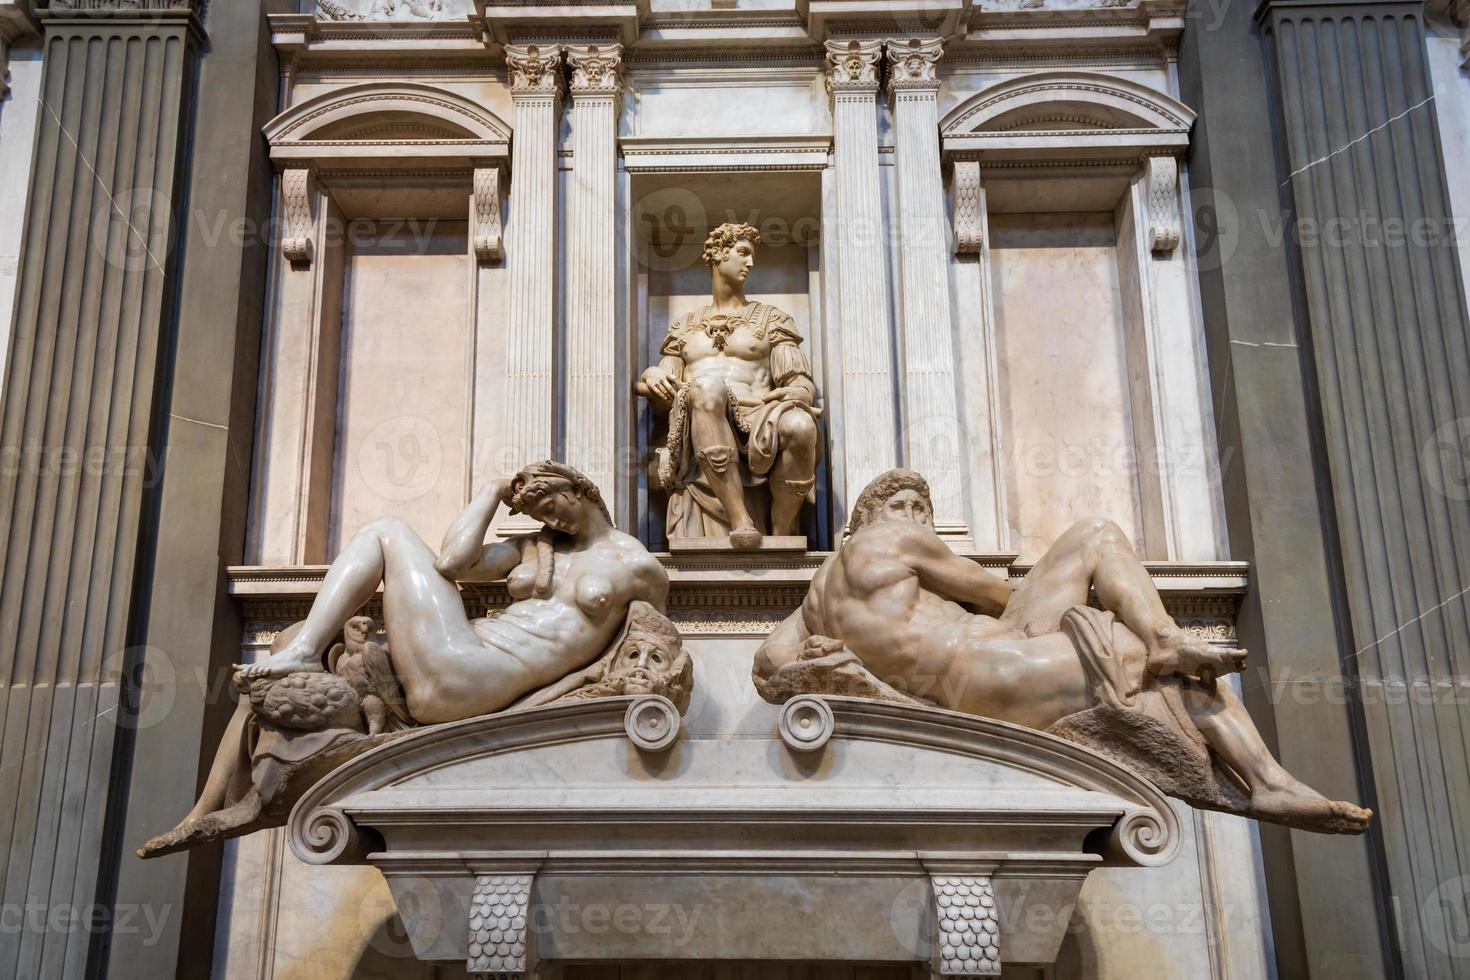 Medici Chapels interior - Cappelle Medicee. Michelangelo Renaissance art in Florence, Italy. photo